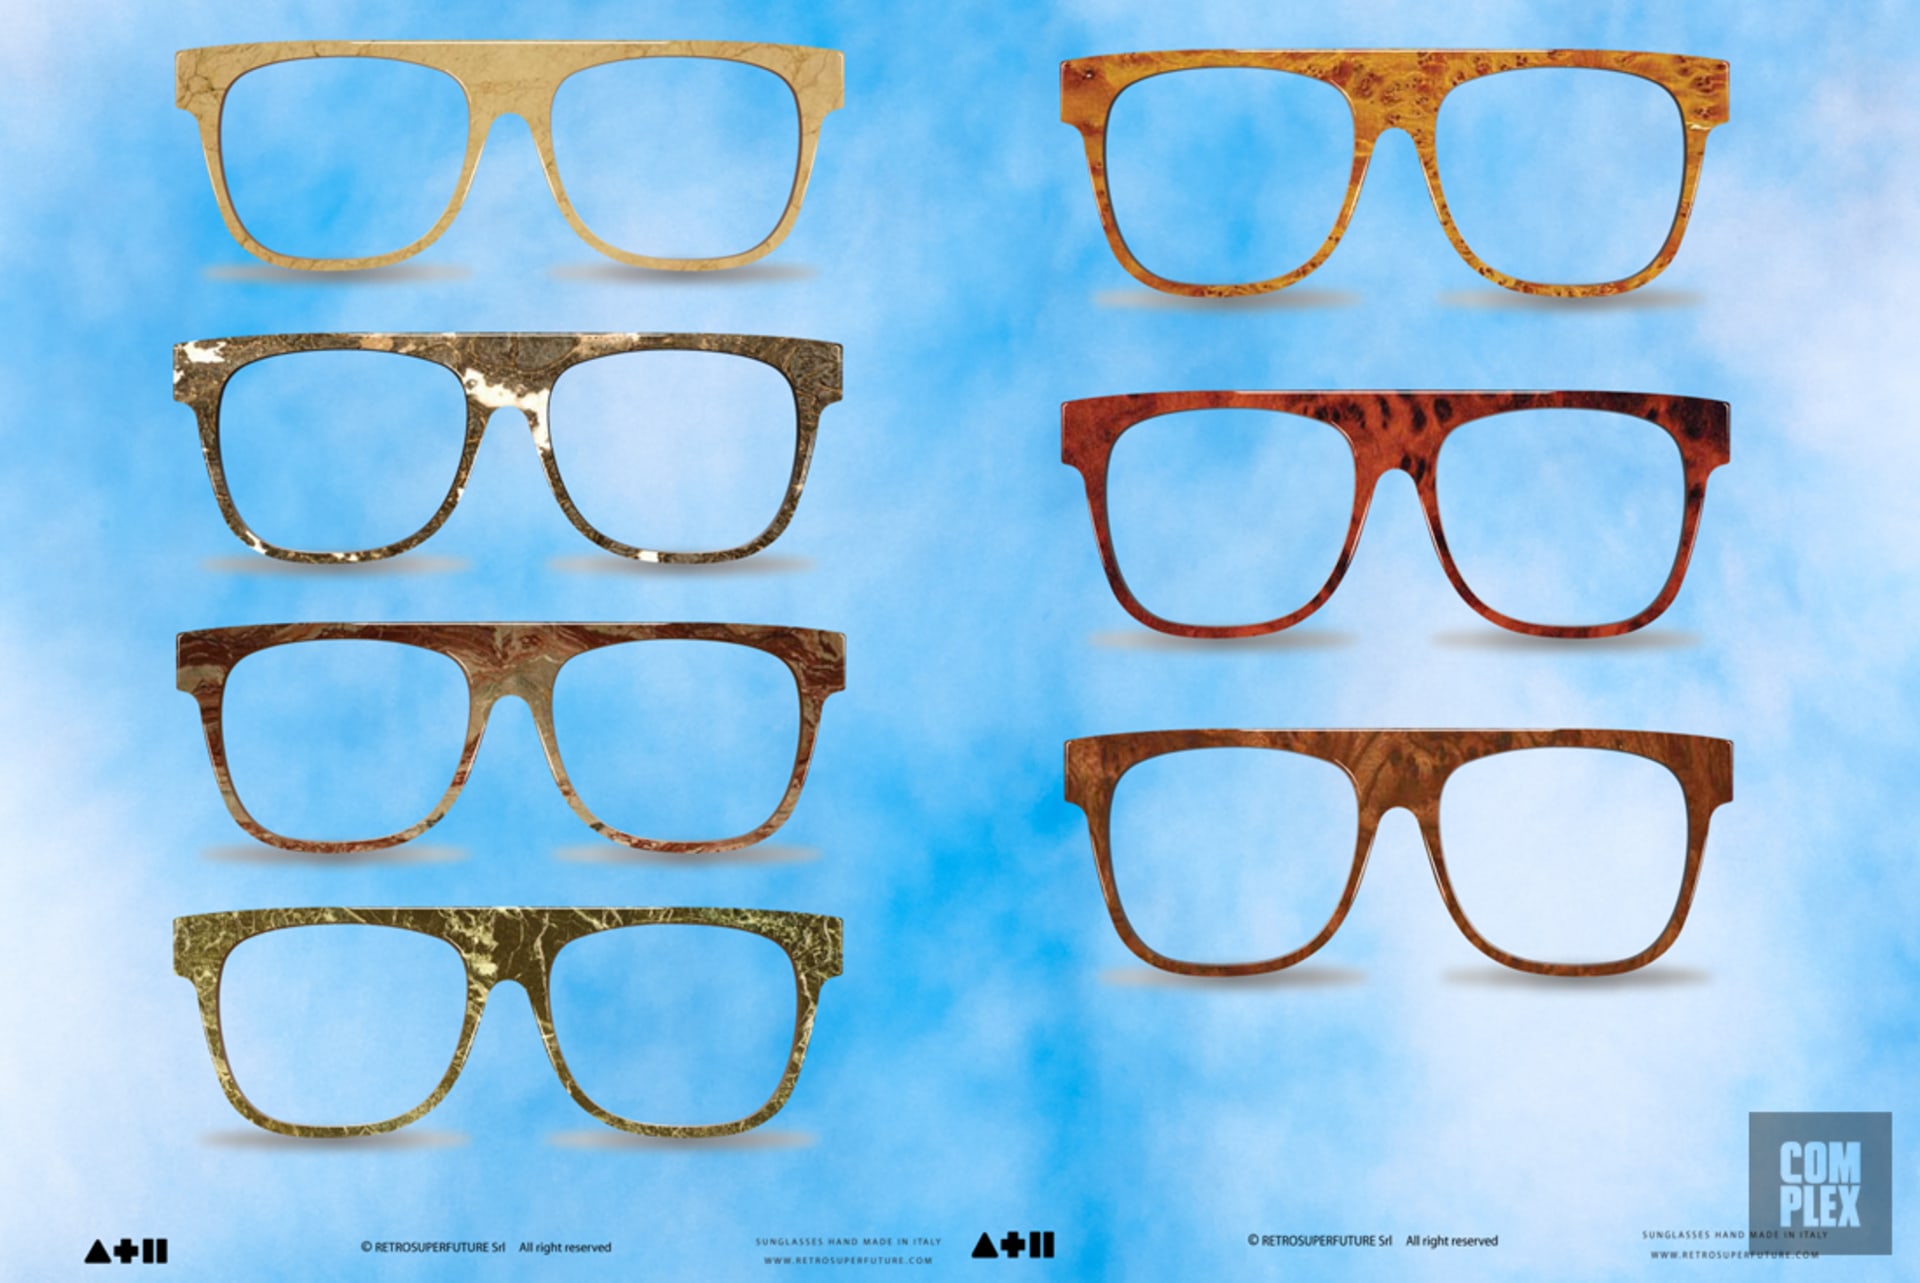 Samples of Pastelle sunglasses designed by Retrosuperfuture